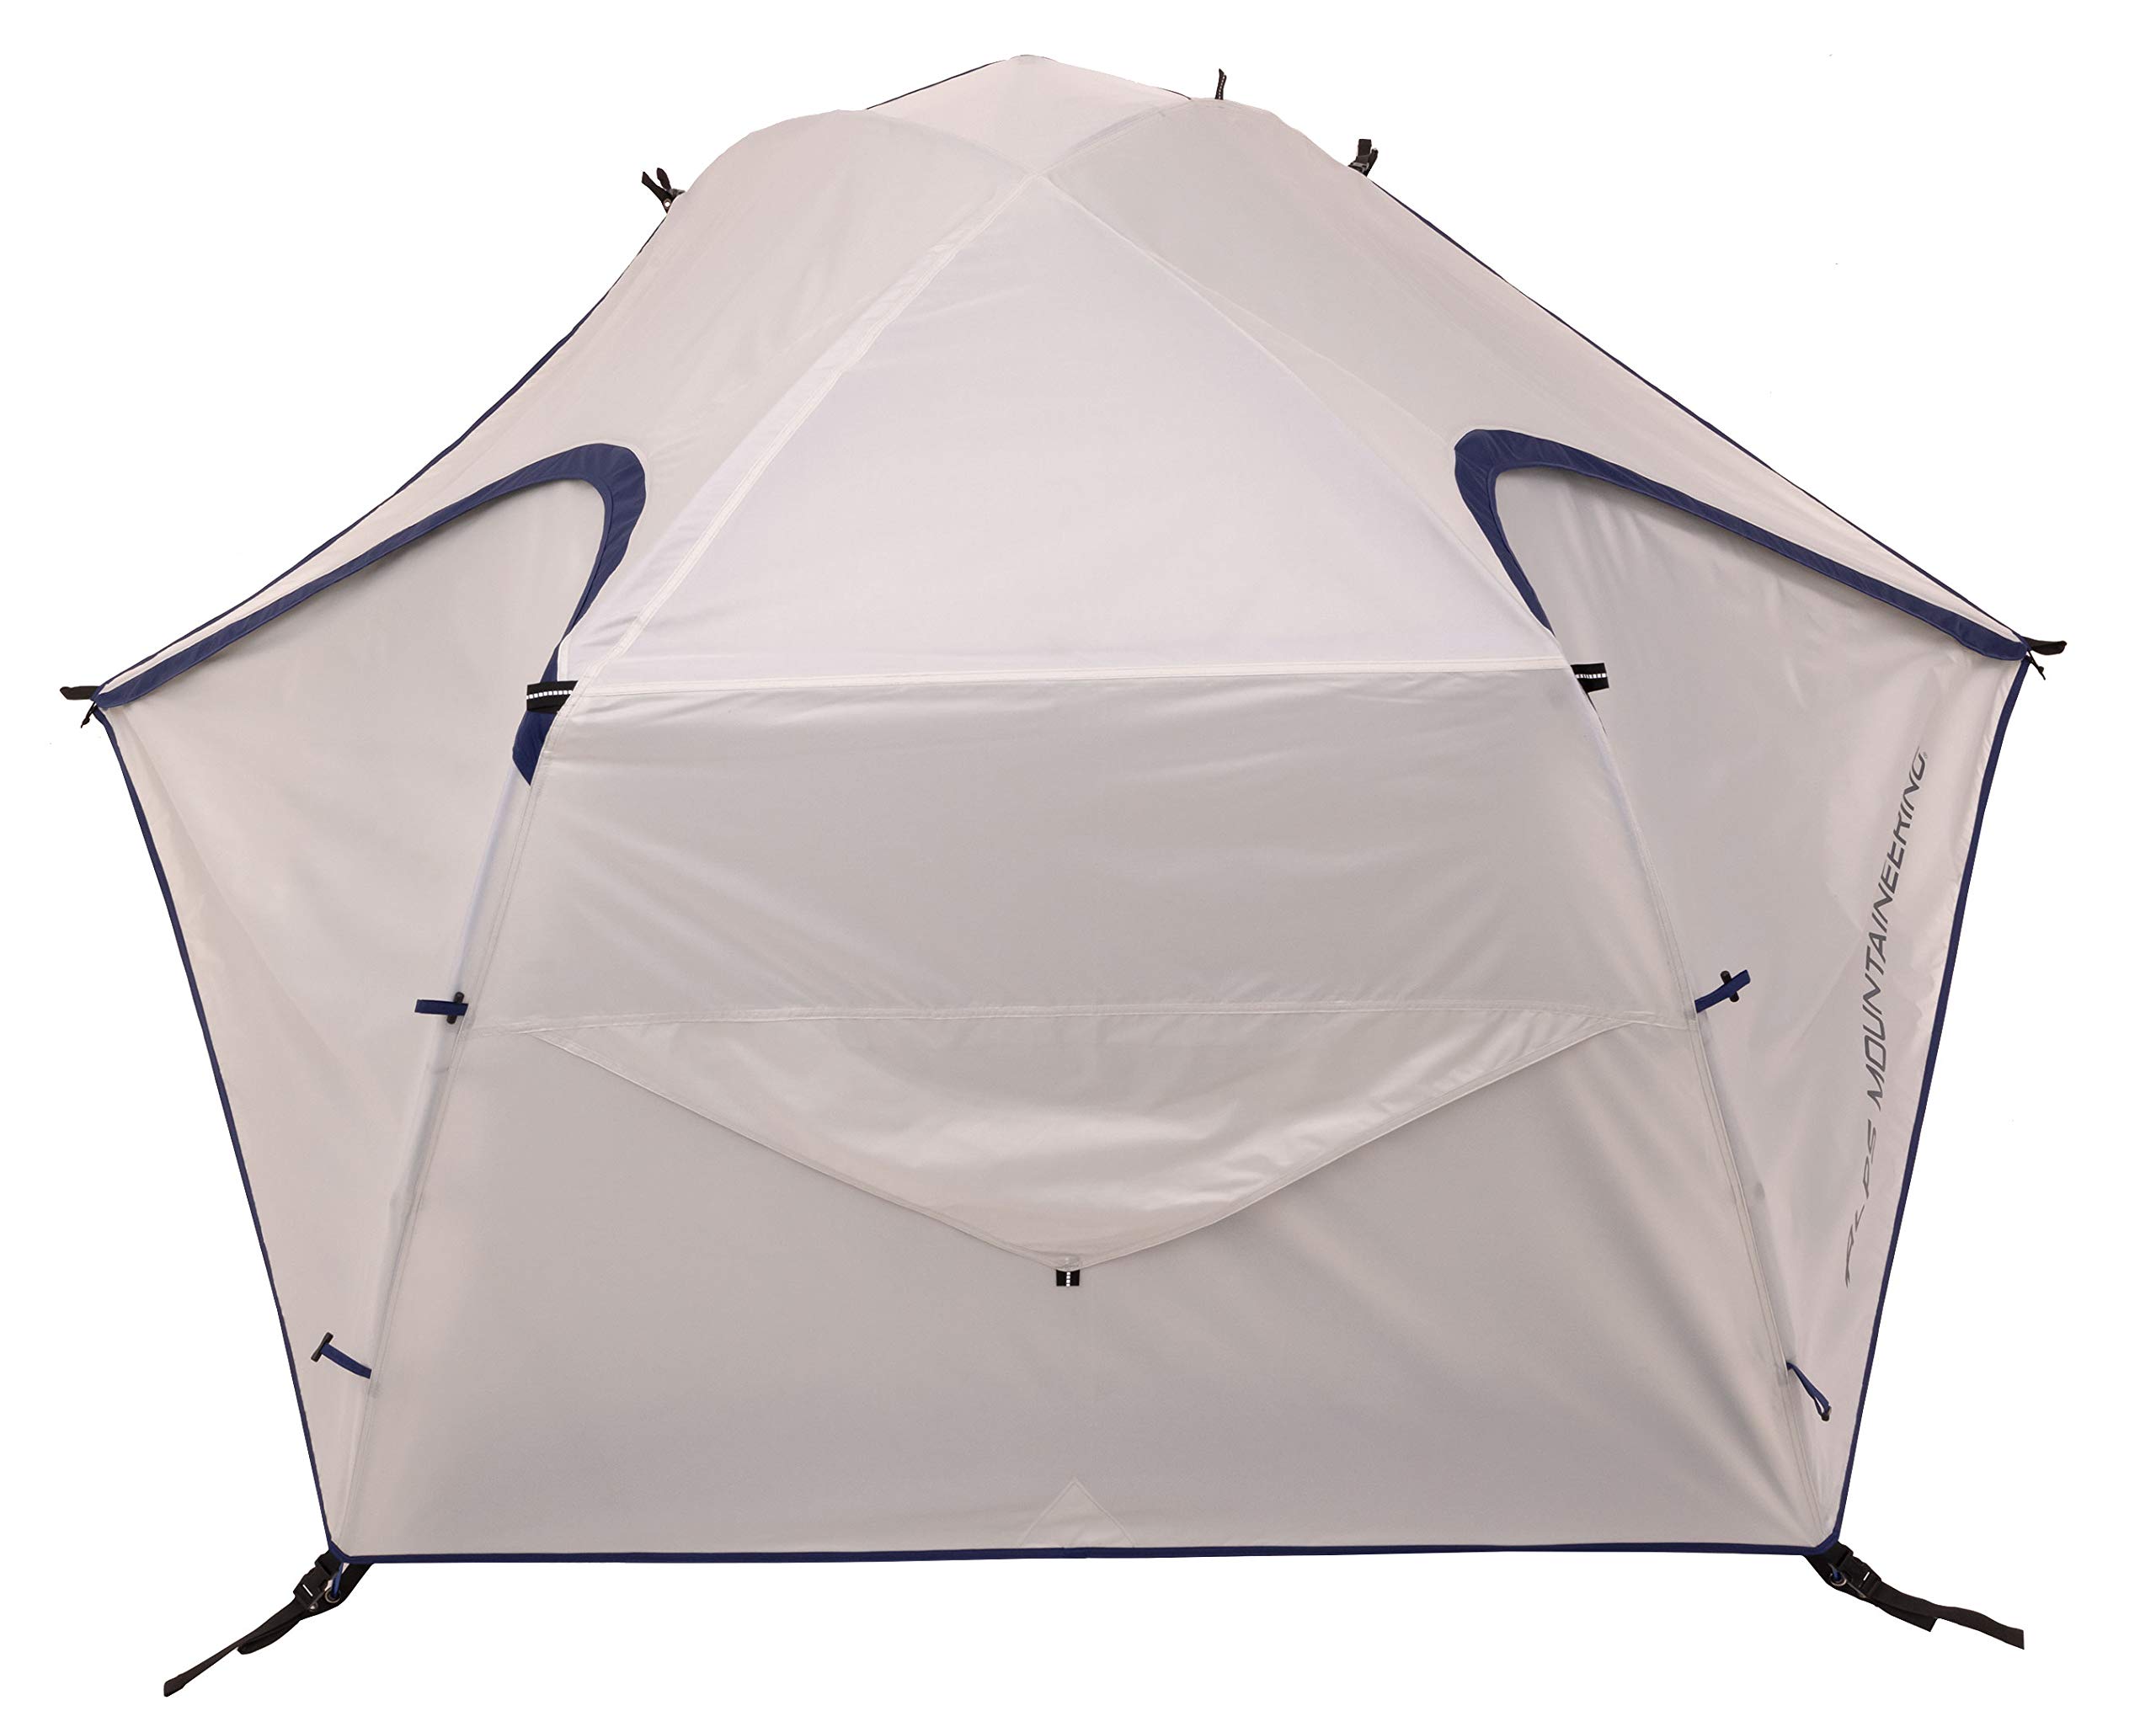 ALPS Mountaineering Zephyr 3-Person Tent - Gray/Navy